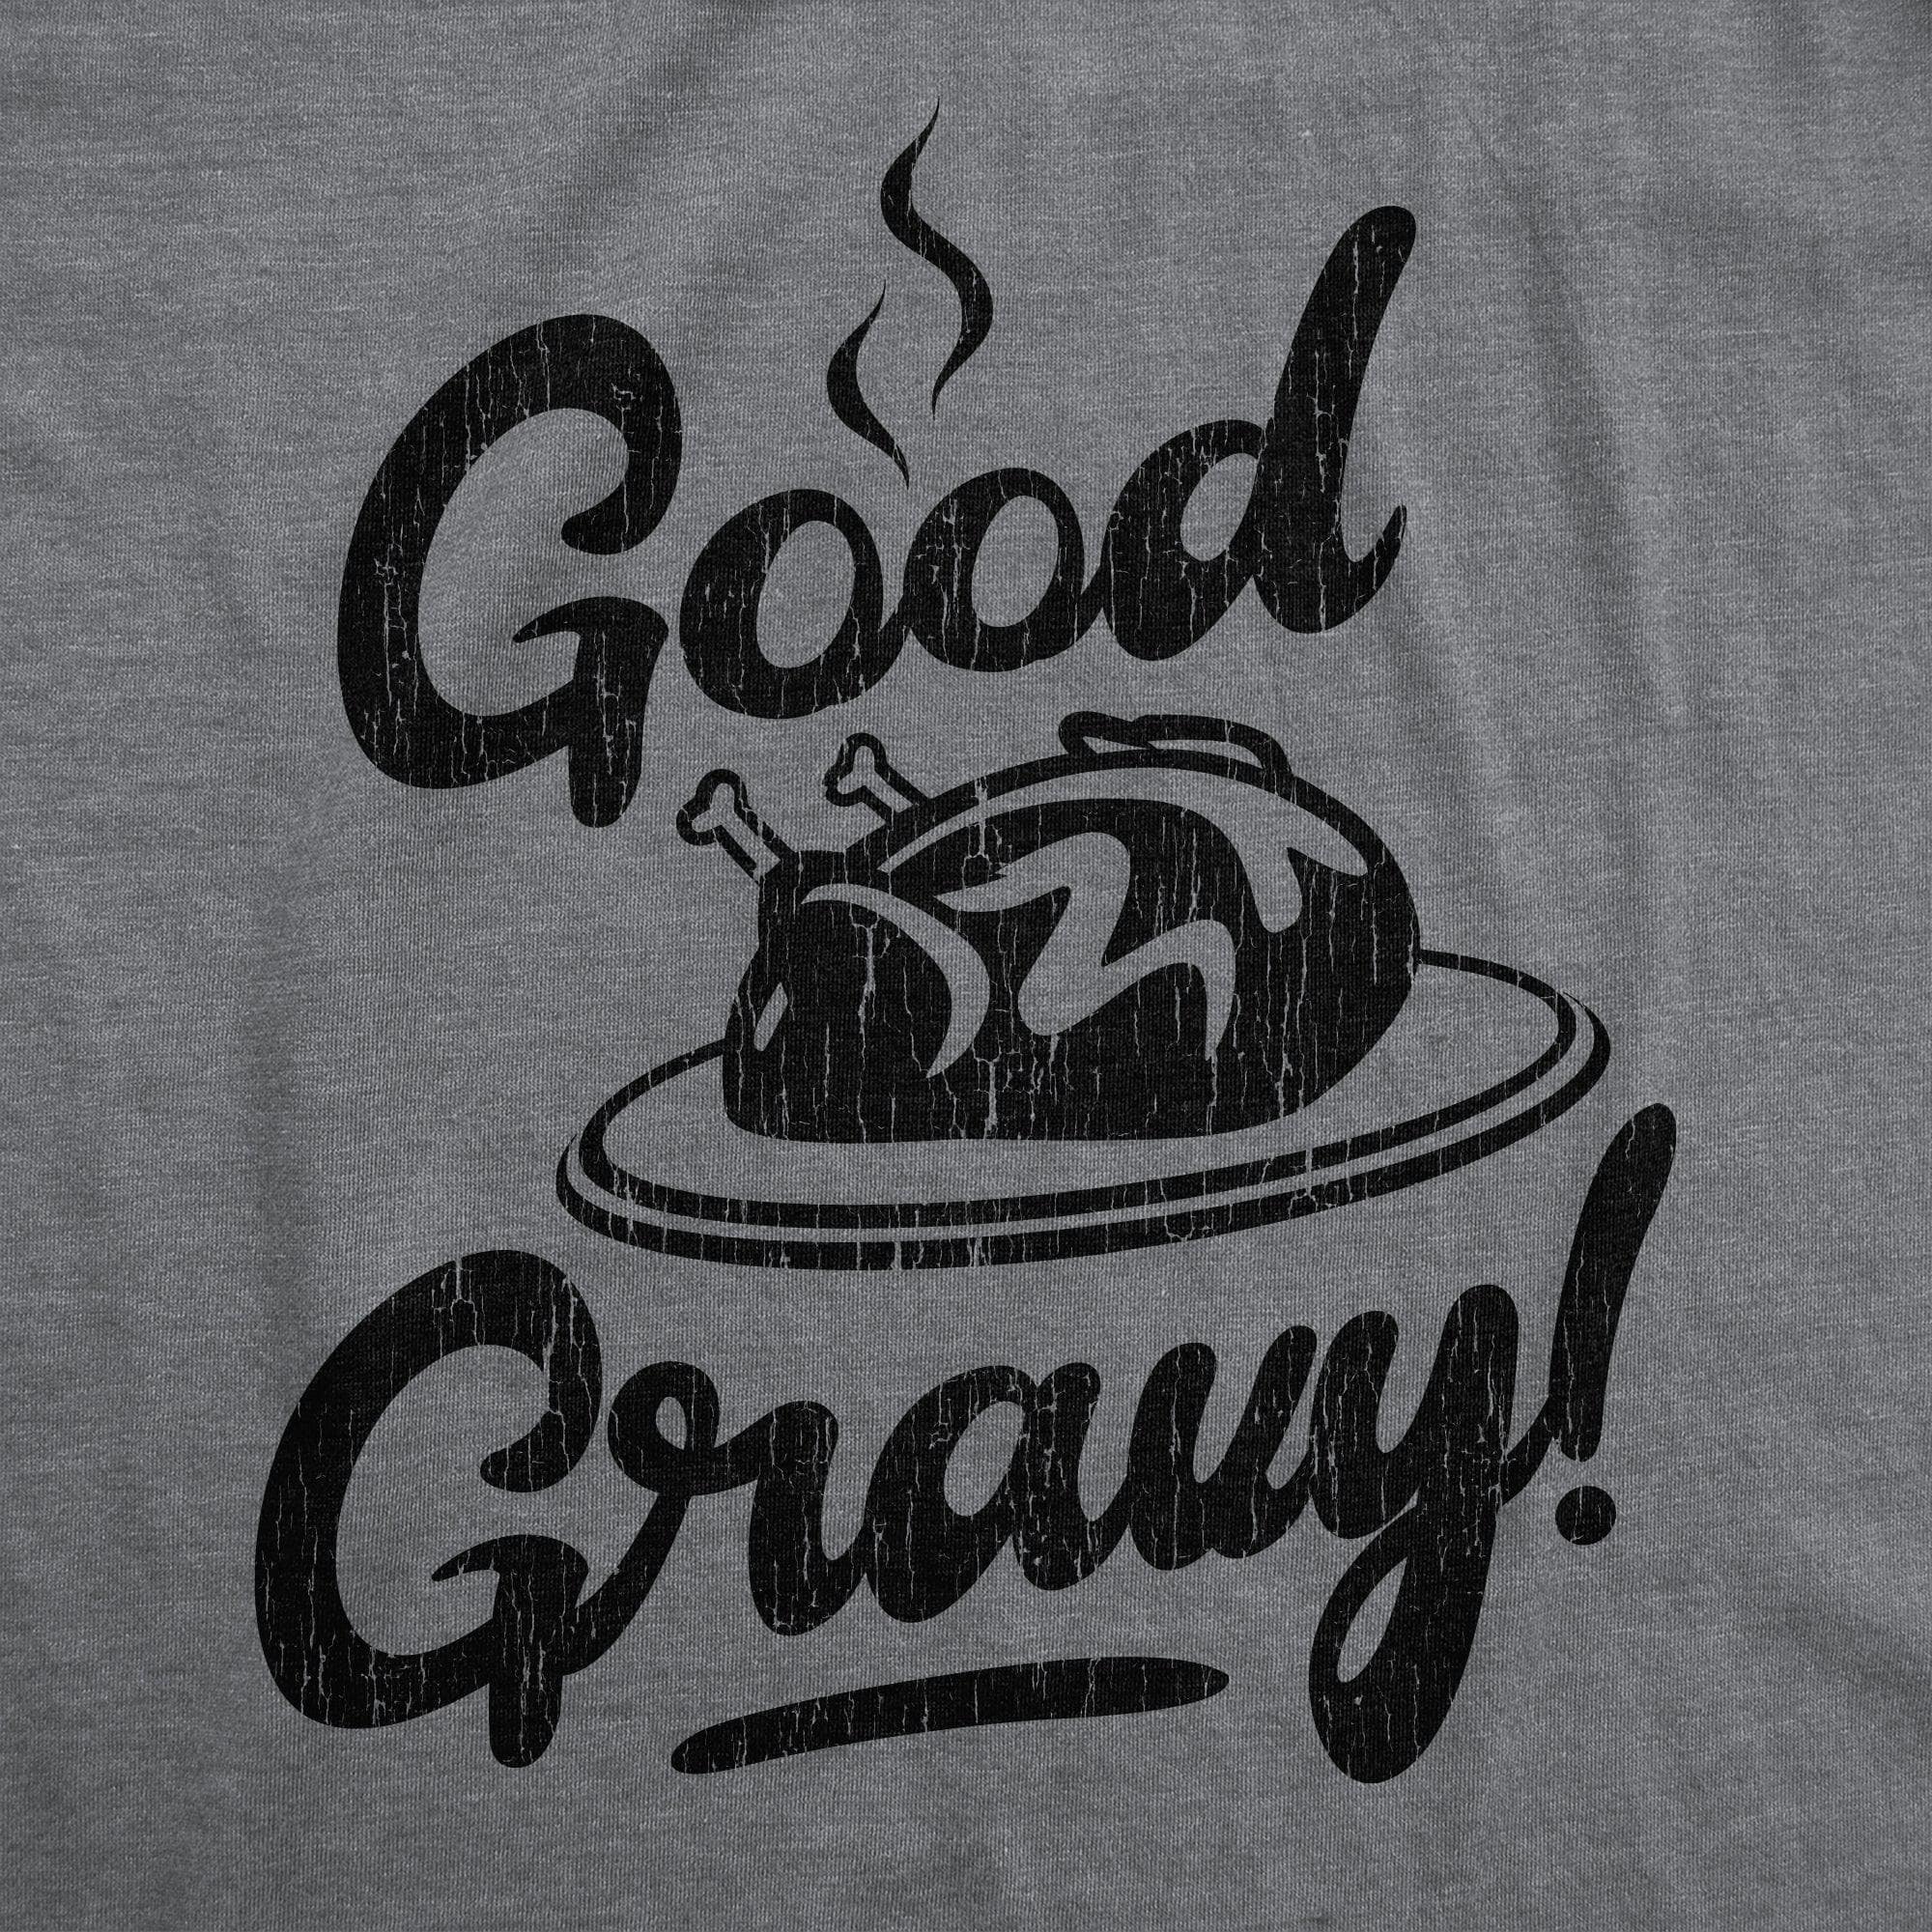 Good Gravy Men's Tshirt  -  Crazy Dog T-Shirts